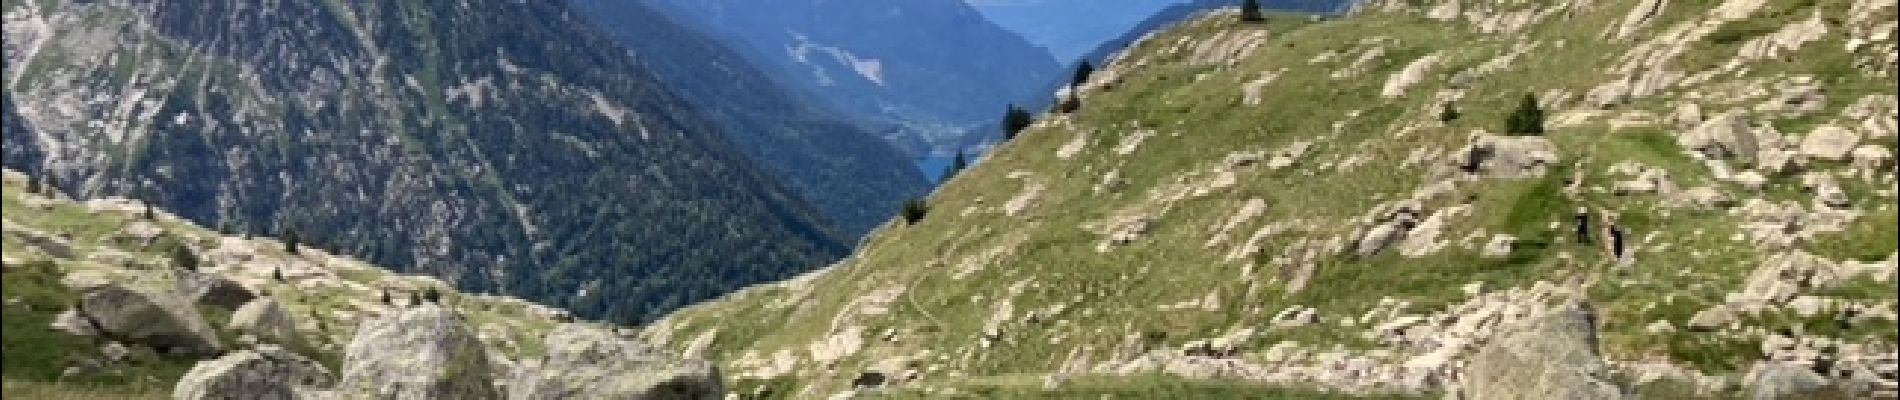 Randonnée Marche Vielha e Mijaran - Lacs Redon et Rius depuis ES Morassi dera,Val de Molières - Photo